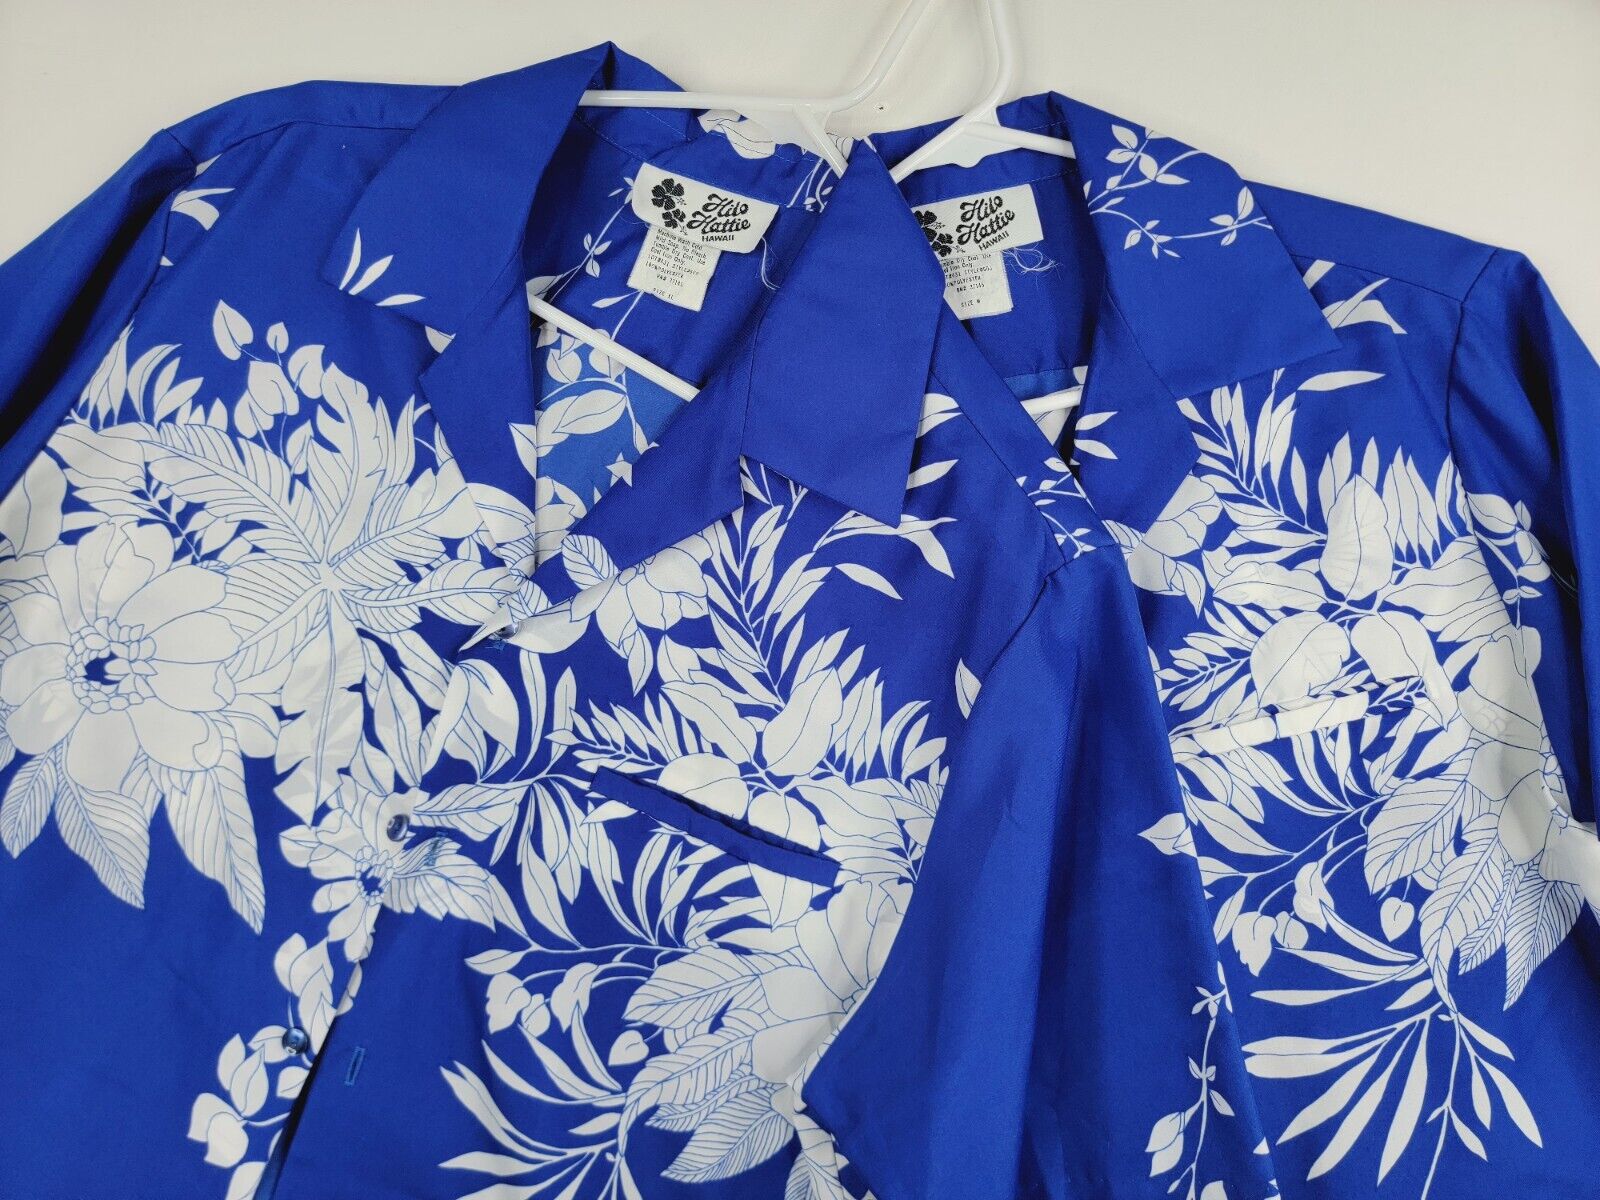 Set of Hilo Hattie\'s Blue Hawaiian Shirts Matching His Hers Men\'s XL Women\'s M